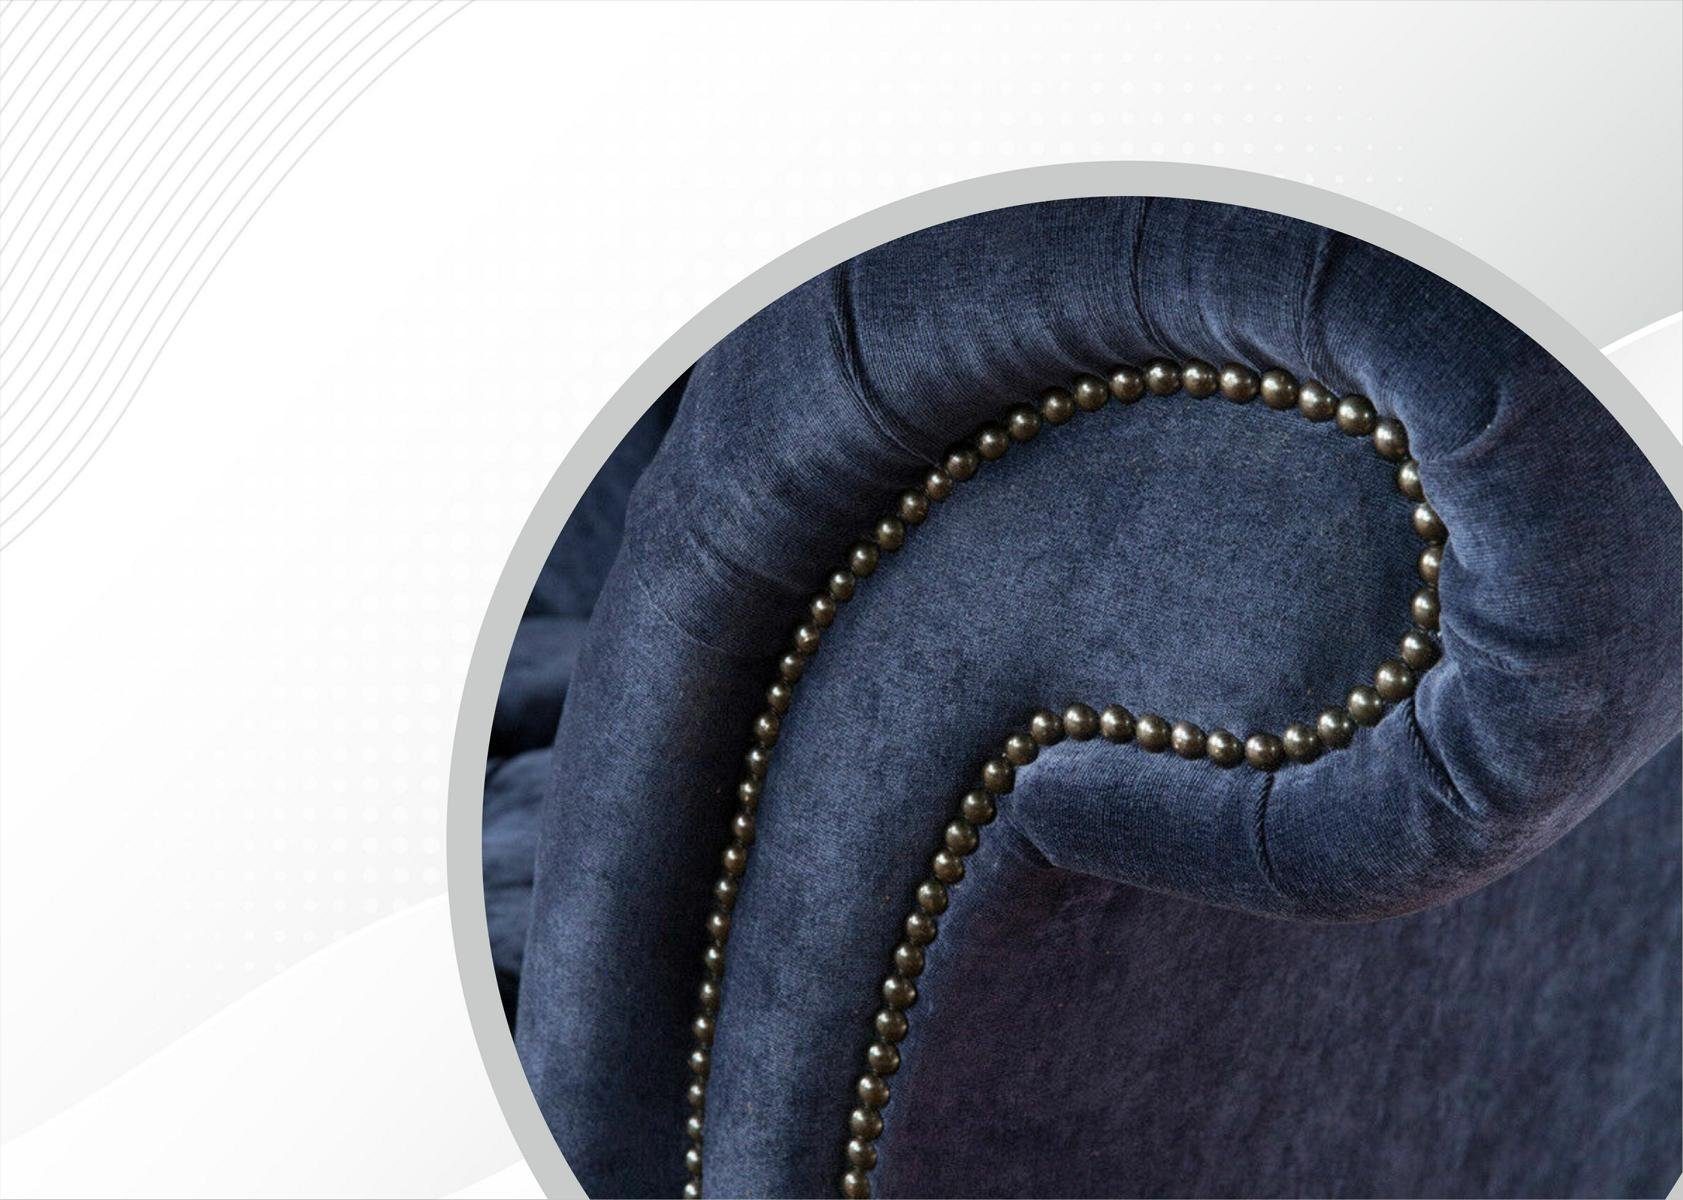 JVmoebel Sofa Chesterfield-Sofa, Zweisitzer Couch 2 Klassische Couch Sitzer Textilsofa Polster